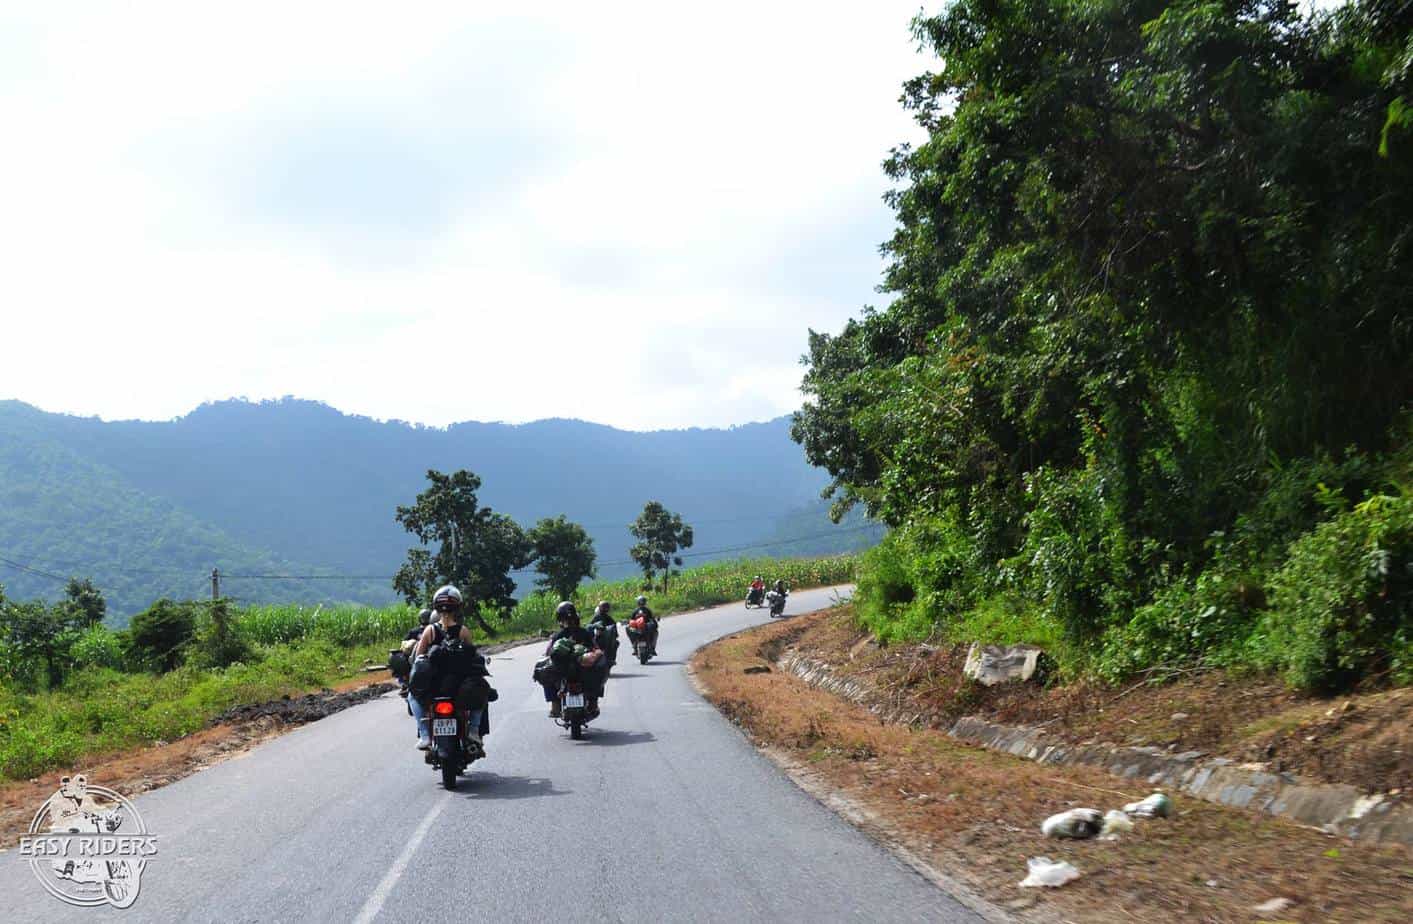 Day 1: Hoi An - Kham Duc (150 km - 5 hours riding)